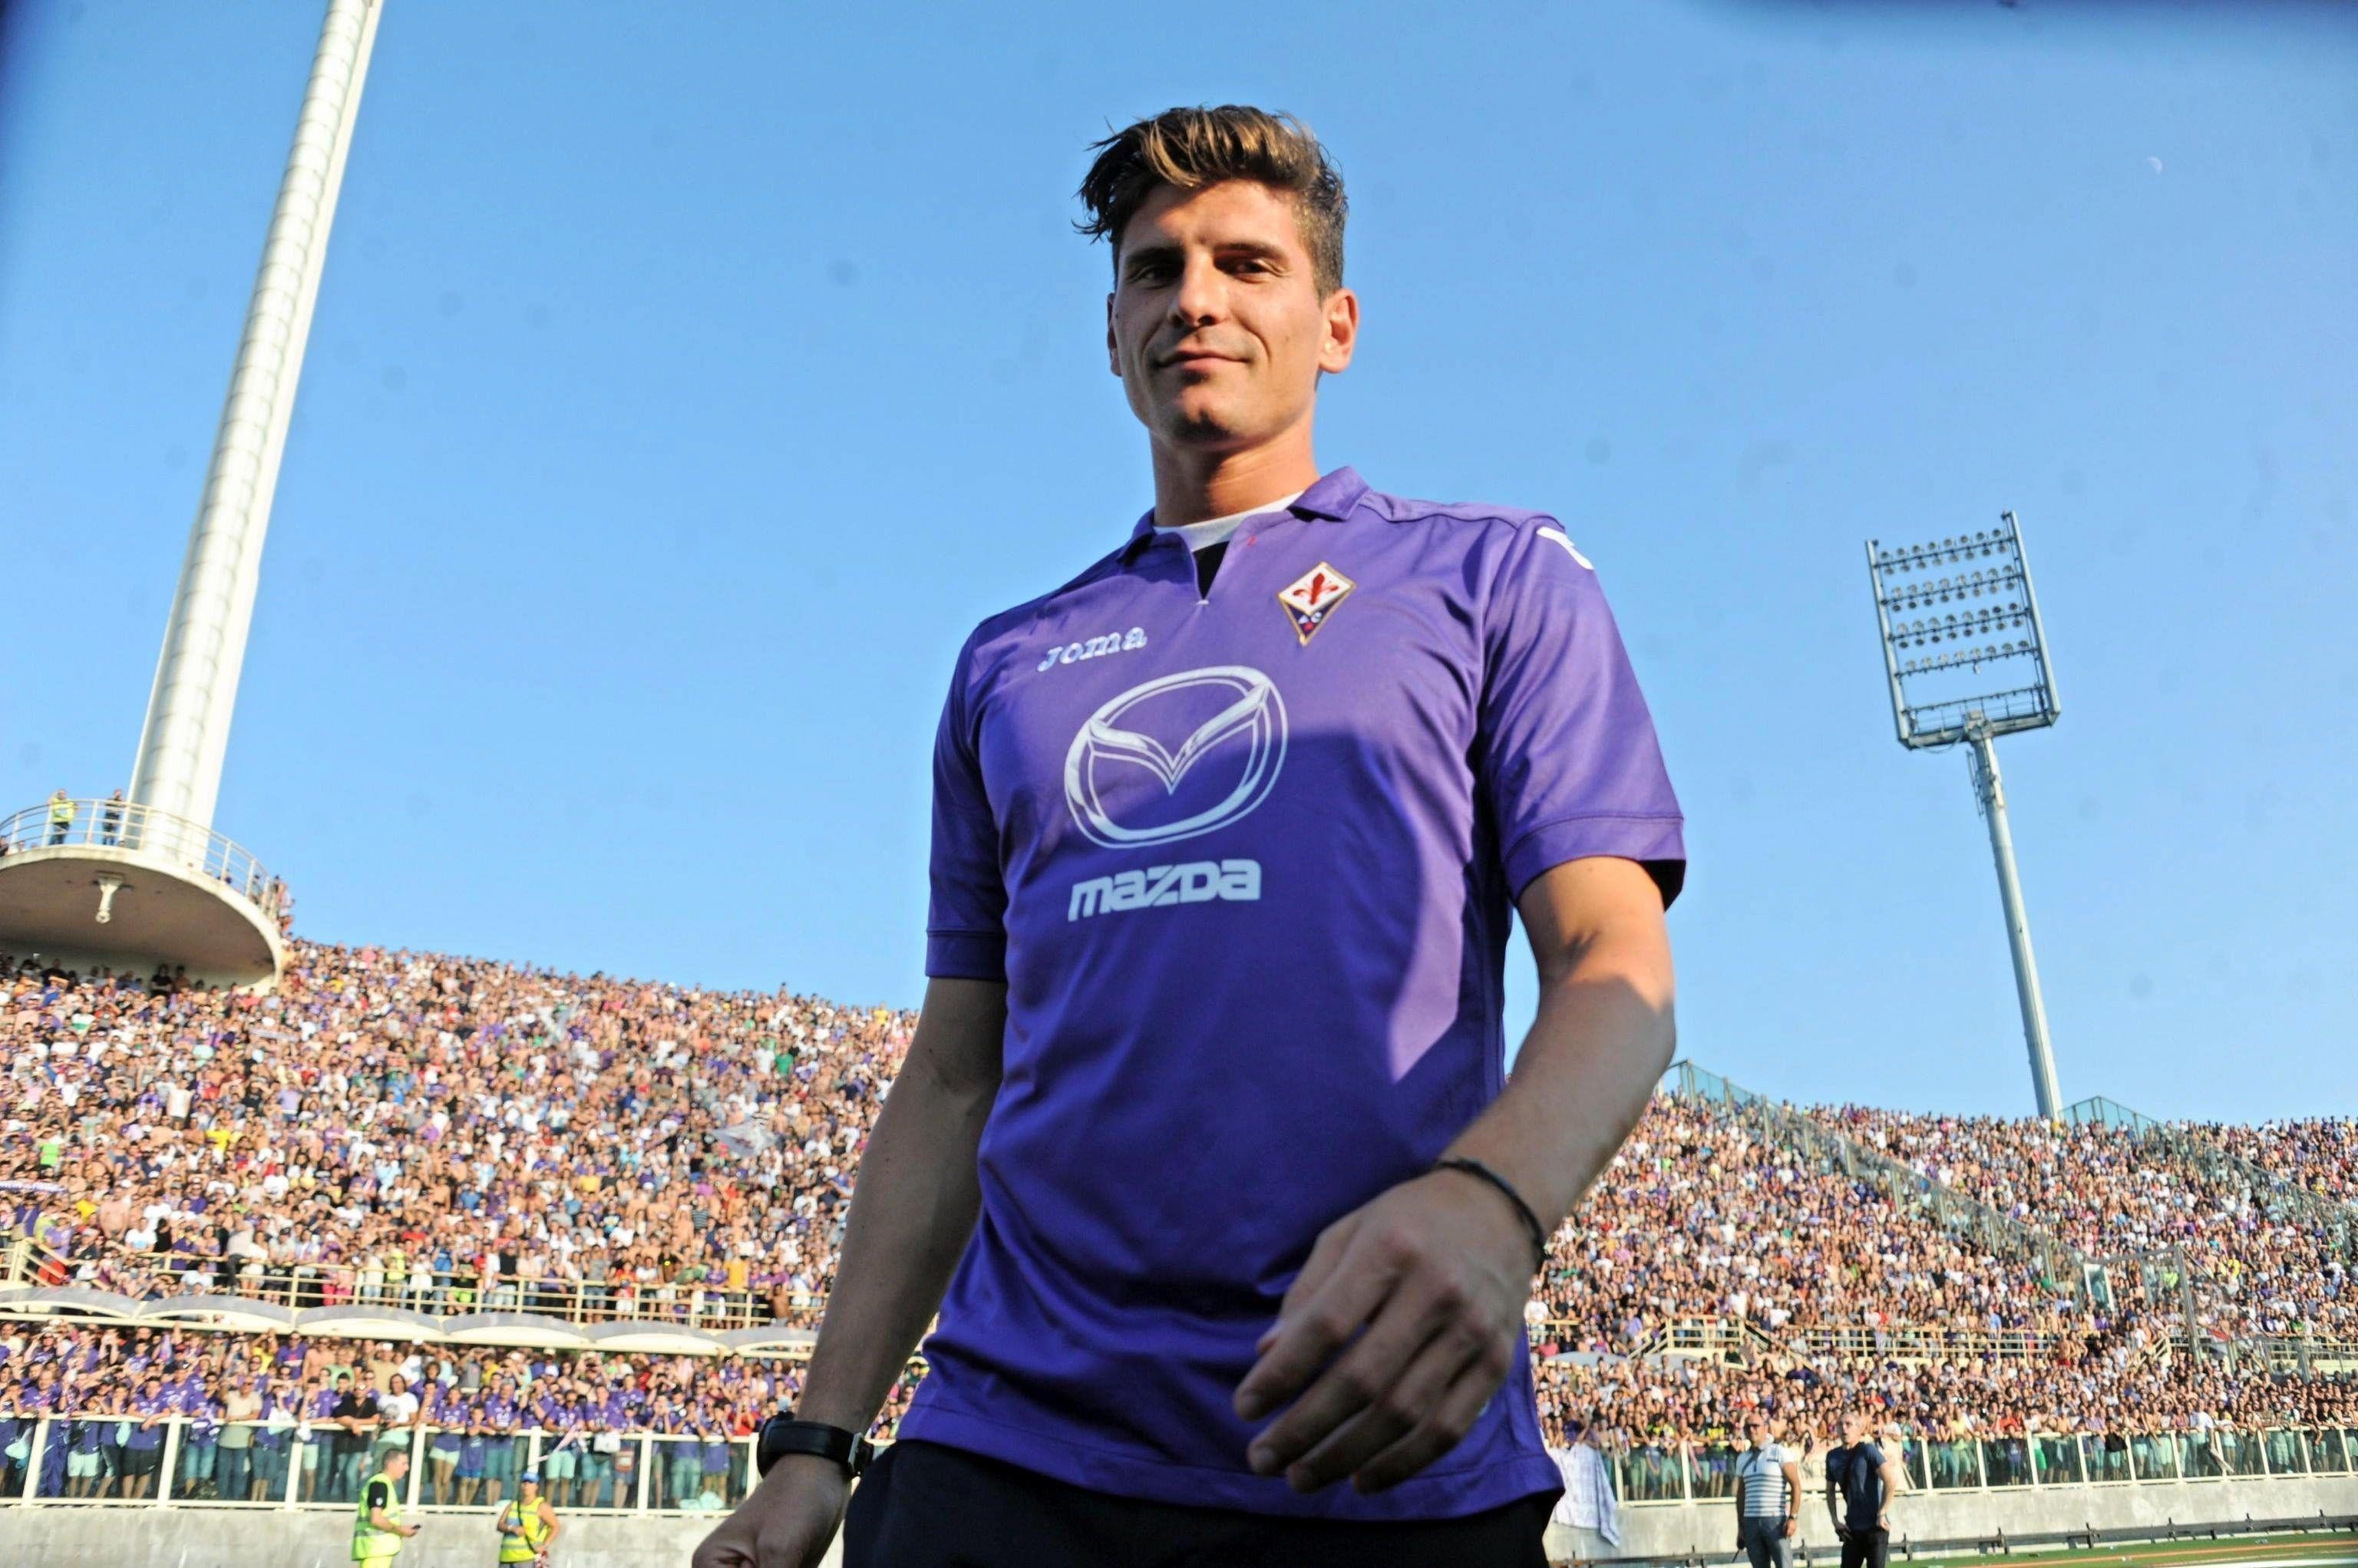 The player of Fiorentina Mario Gomez wallpaper and image